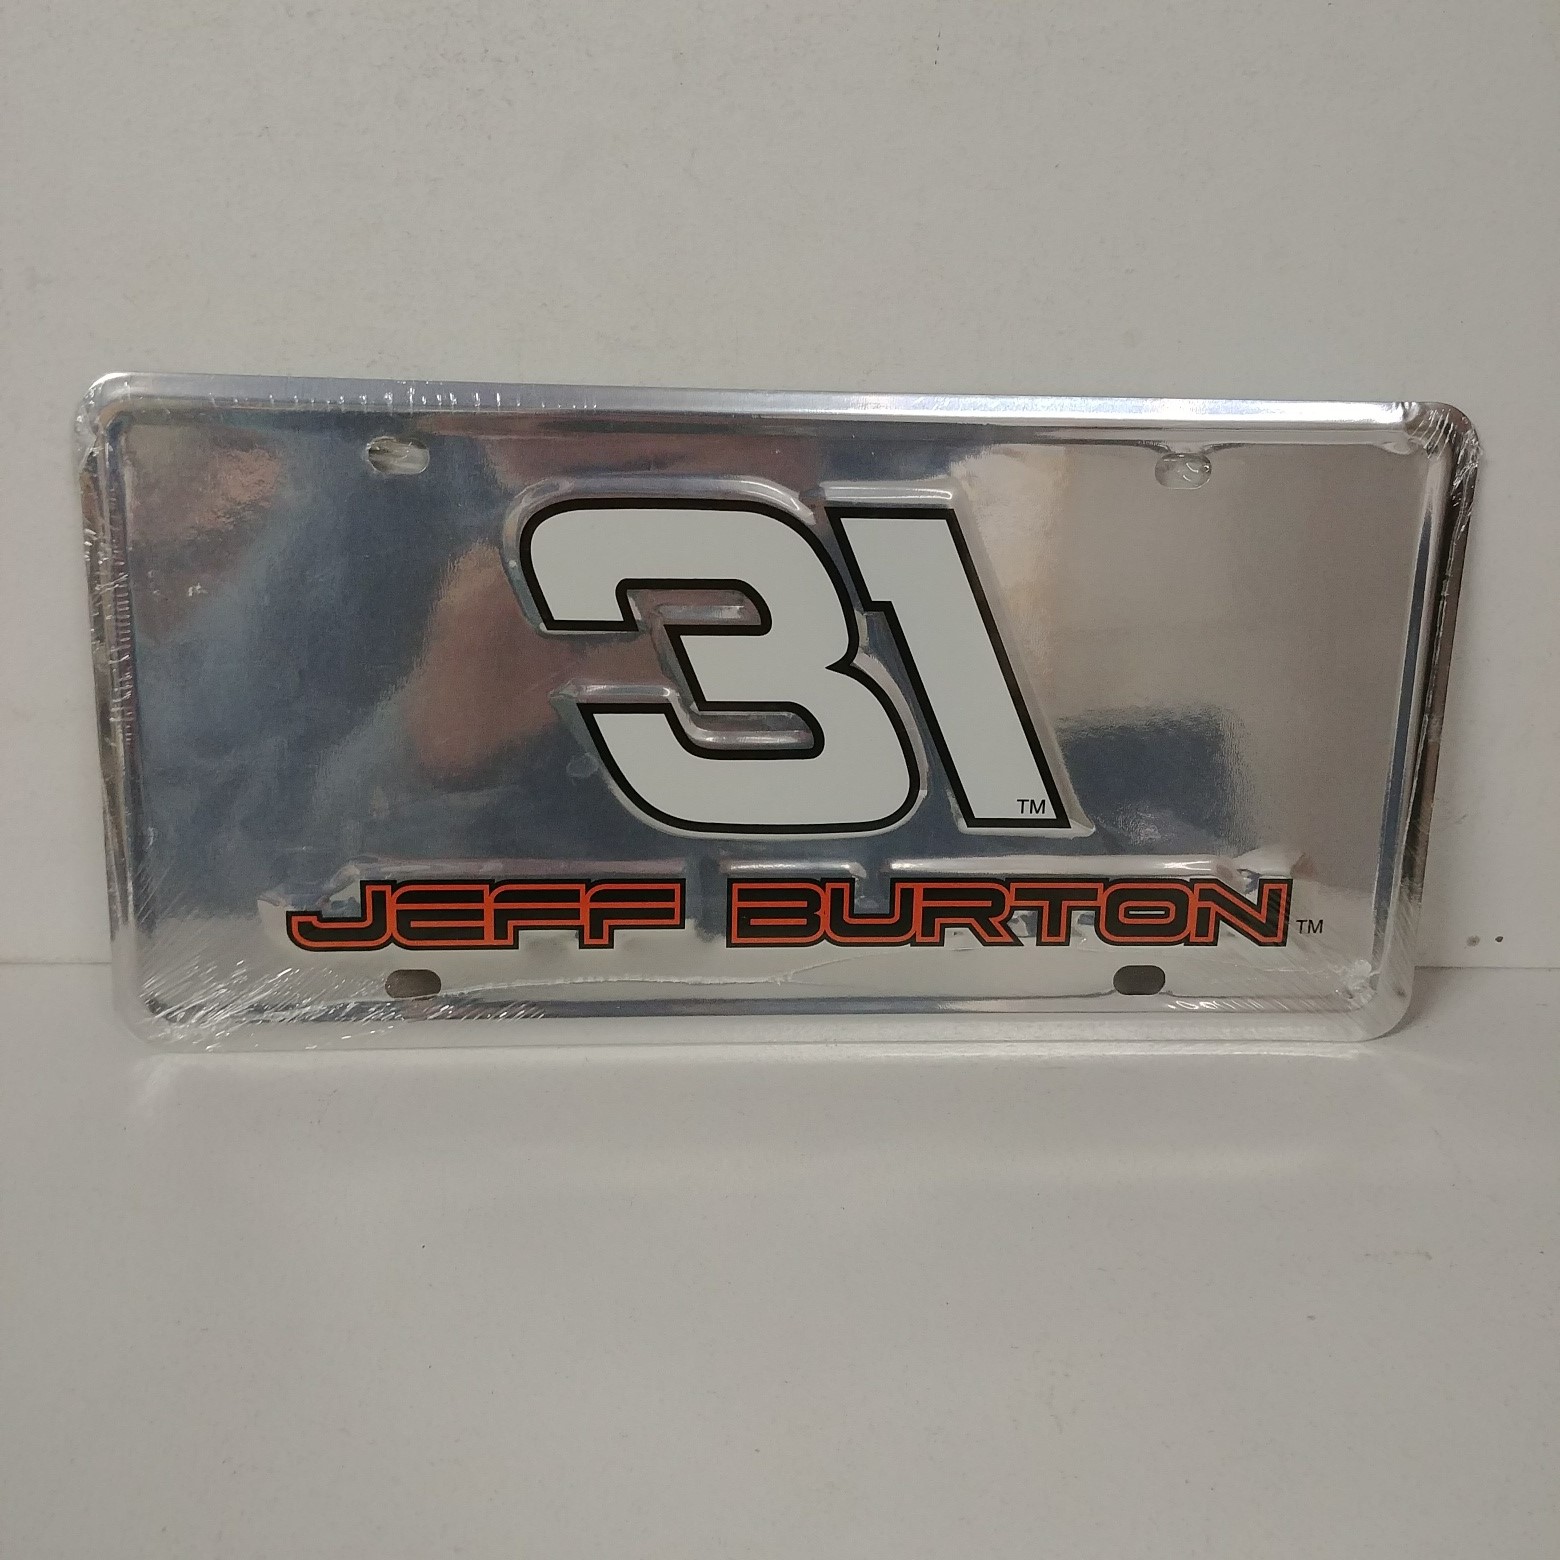 2005 Jeff Burton "Big 31" metal license plate